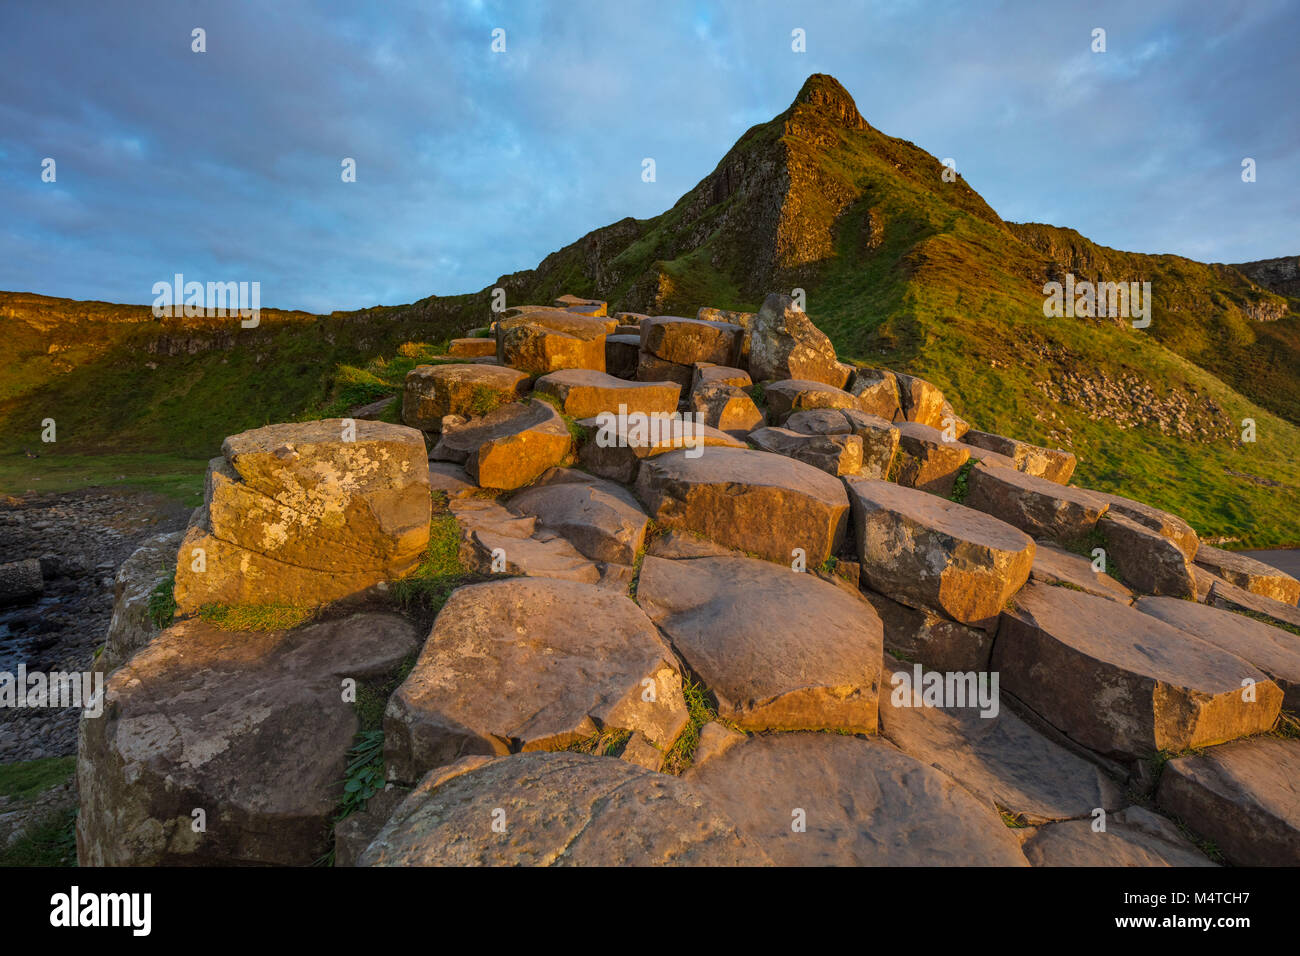 The hexagonal basalt columns of the Giant's Causeway, Country Antrim, Northern Ireland. Stock Photo